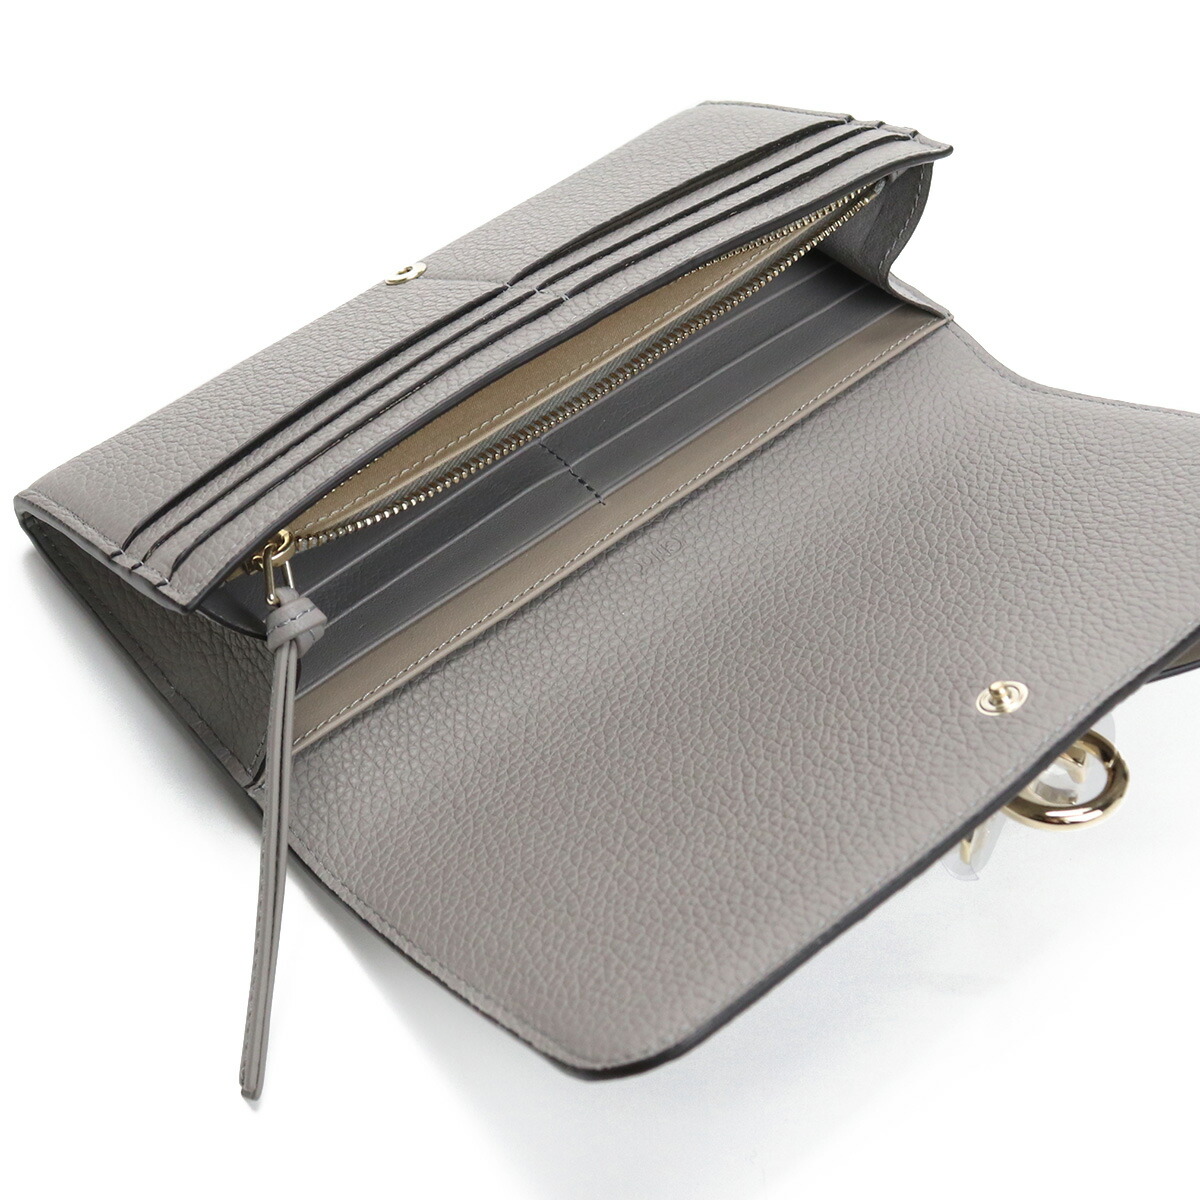 NoName Stamped garnet briefcase discount 73% Red Single WOMEN FASHION Accessories Wallet 